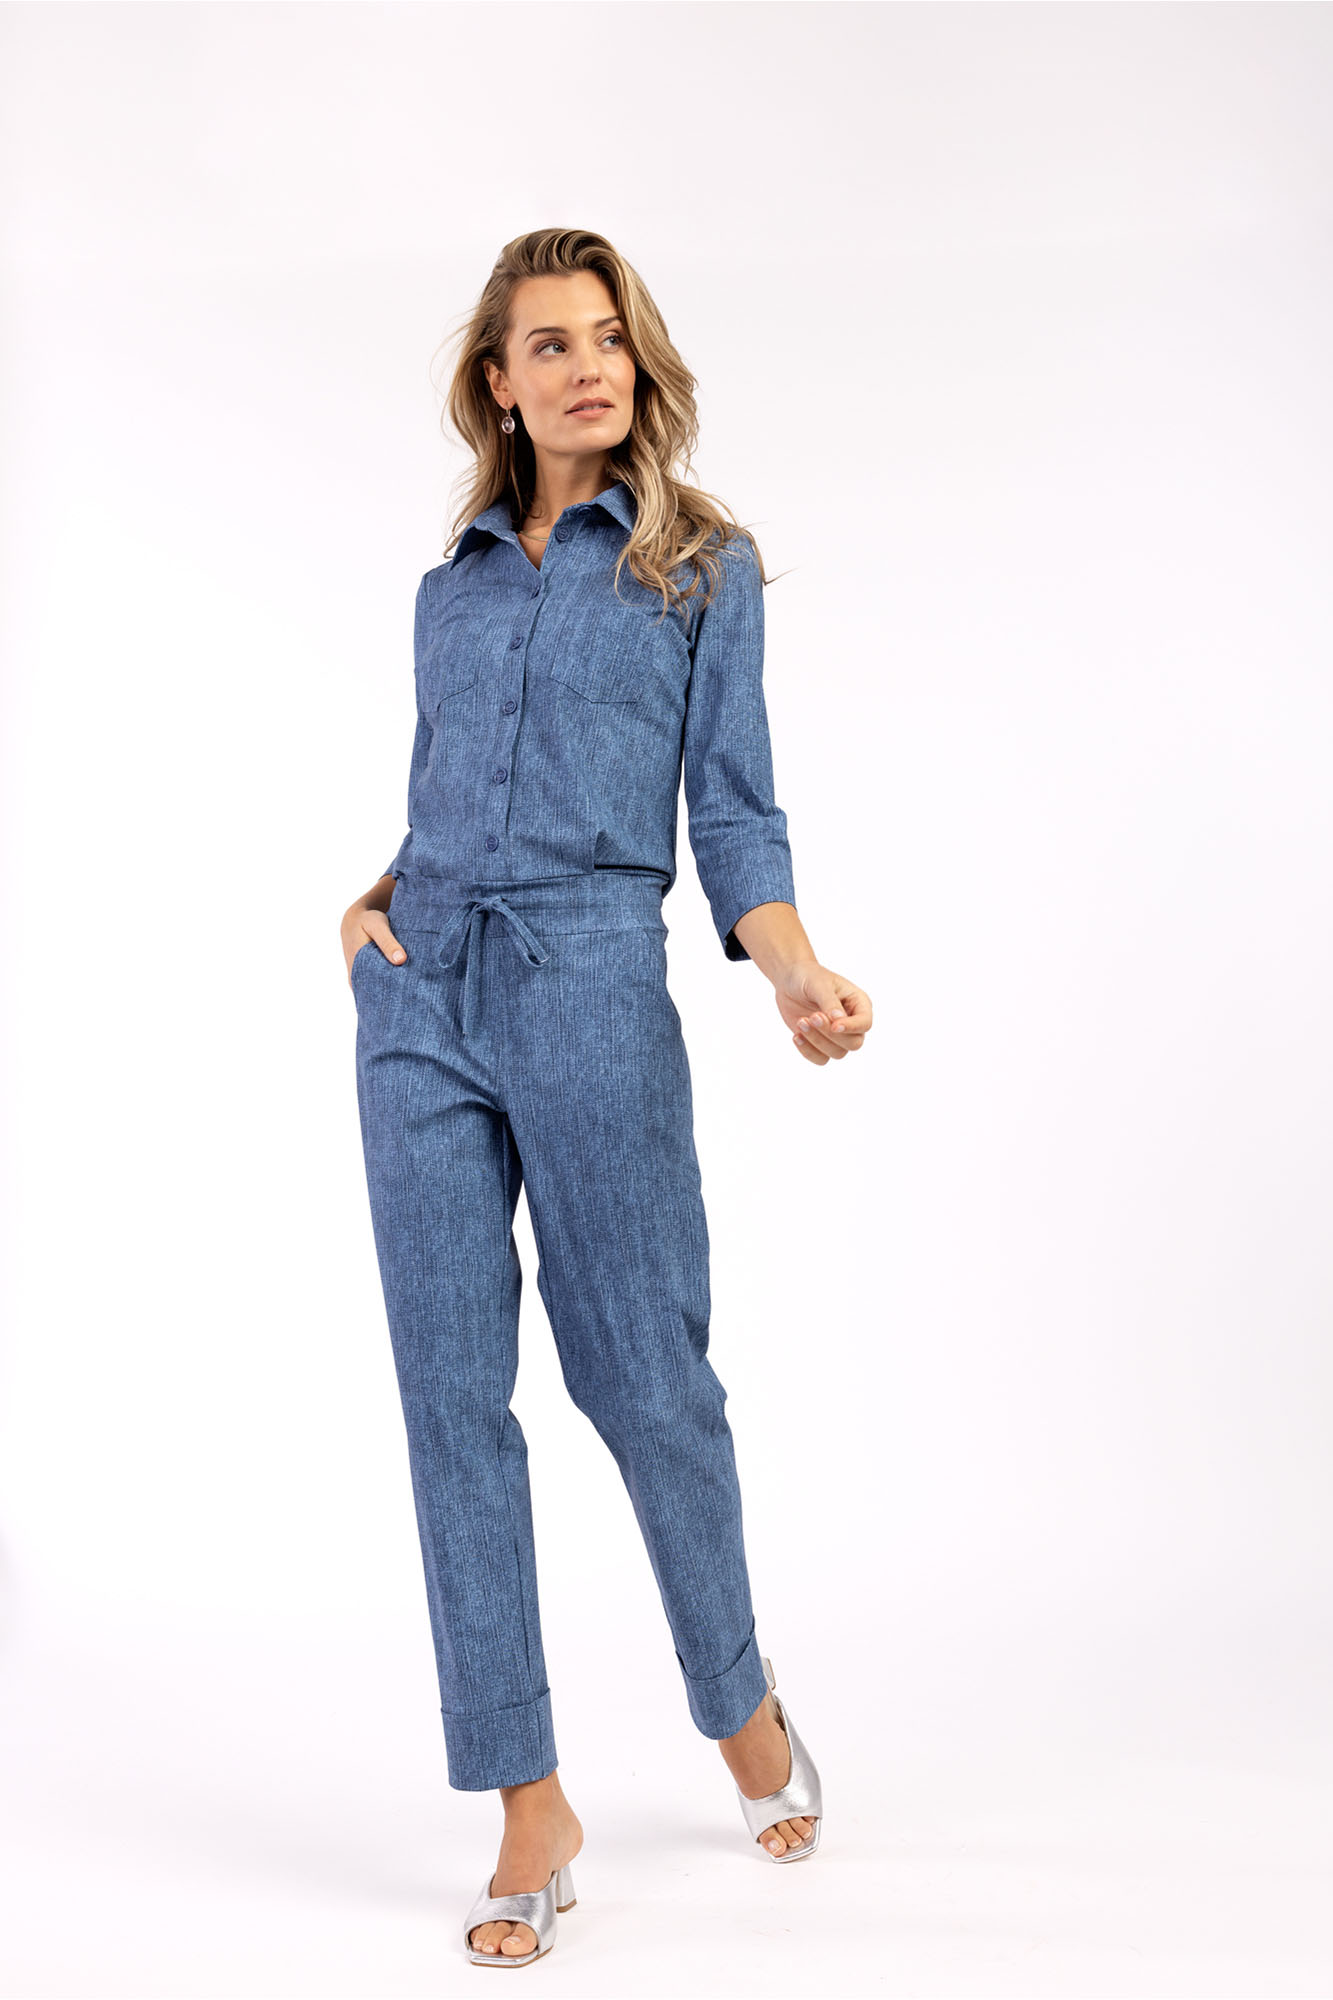 Studio Anneloes Annaly jeans jumpsuit Blauw-1 4